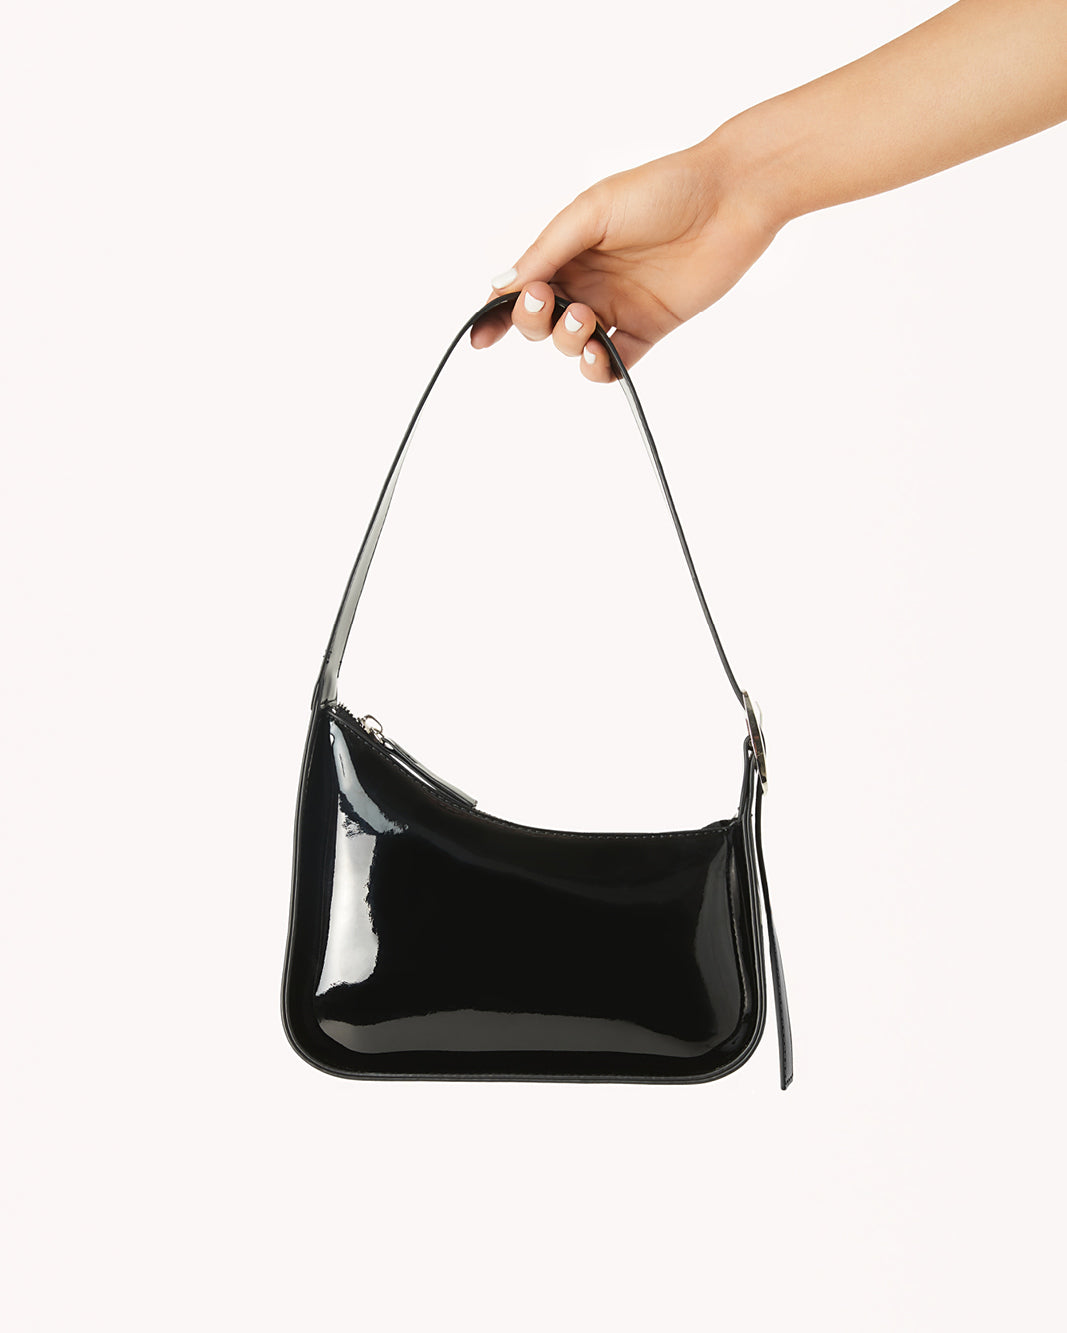 THE SHOULDER - BLACK PATENT-Handbags-Billini-O/S-Billini